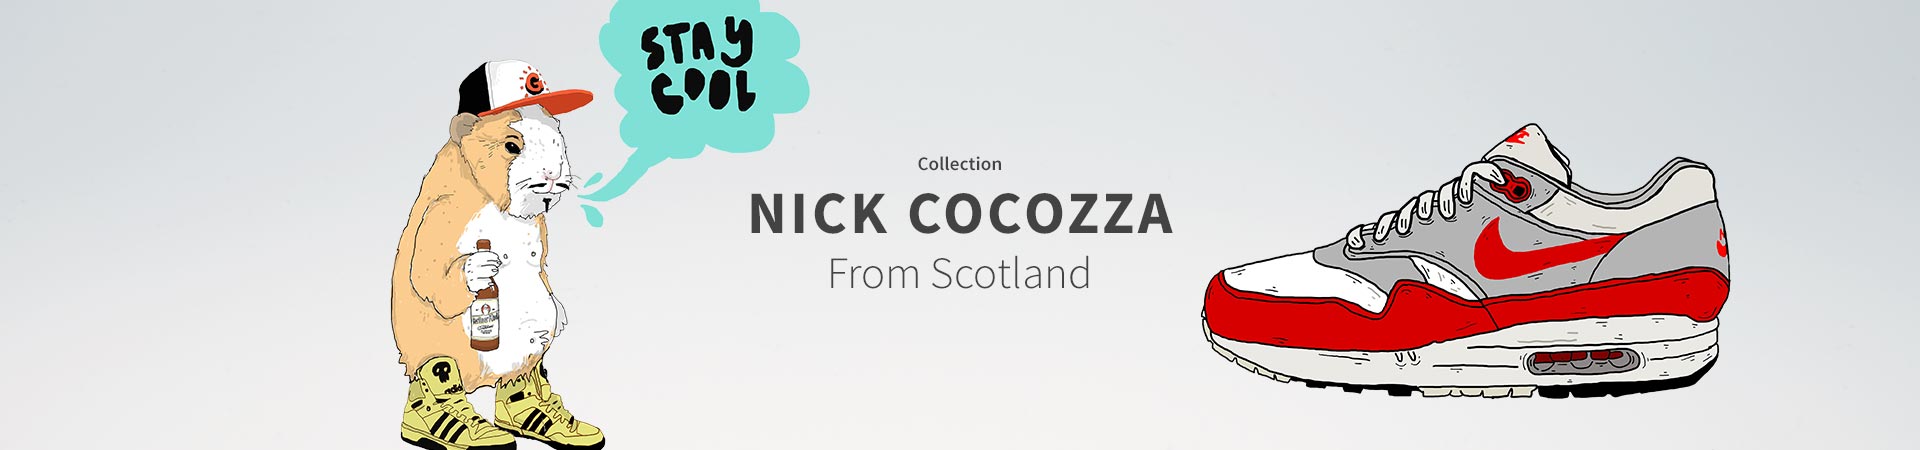 Collection Nick Cocozza